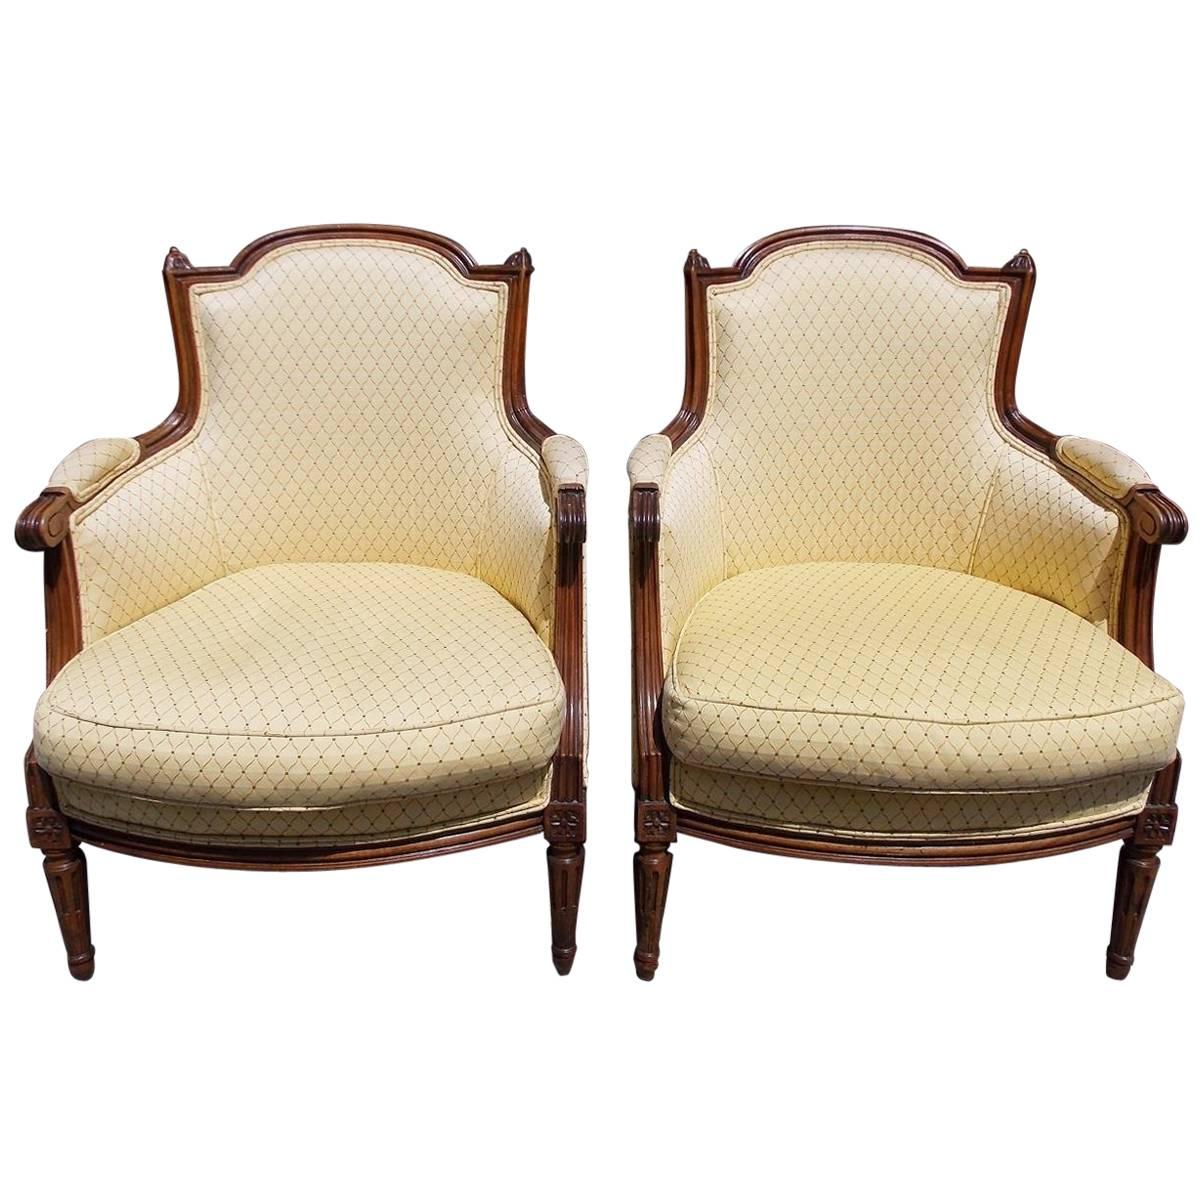 Pair of Italian Walnut Bergere Upholstered Armchairs, Circa 1780